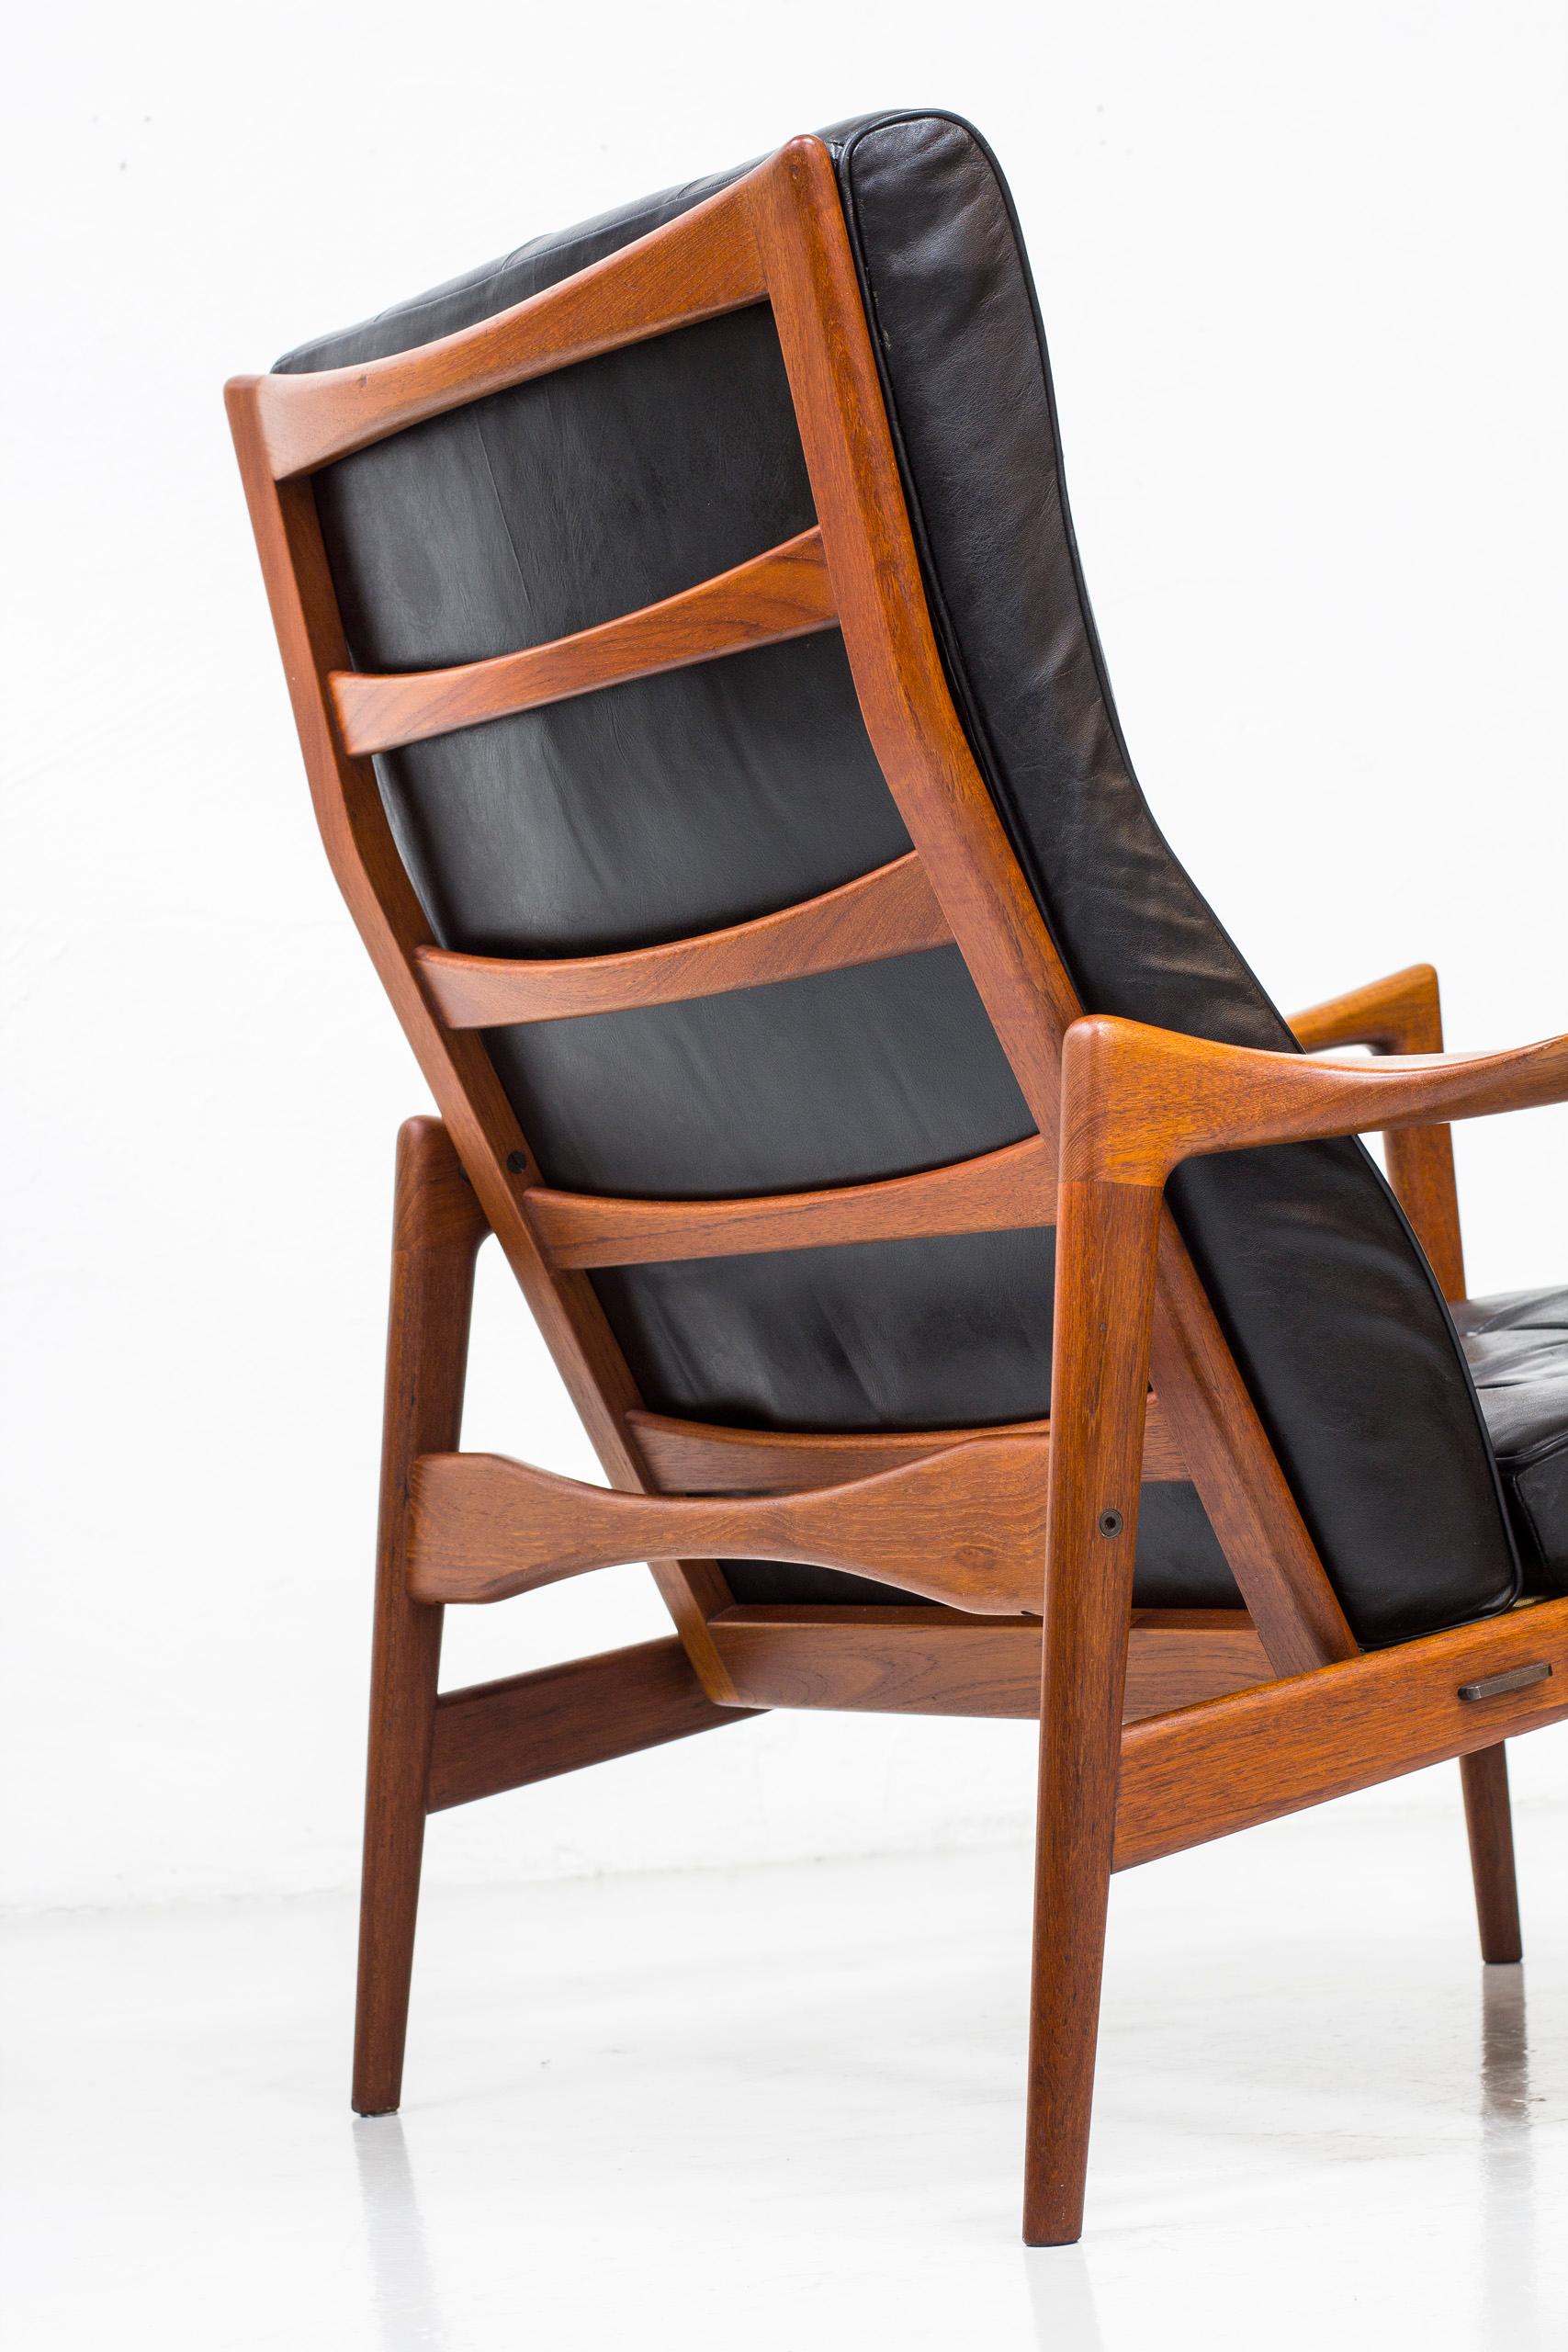 Mid-20th Century Lounge Chair and Ottoman in Teak by Ib Kofod-Larsen, Danish Modern, 1950s